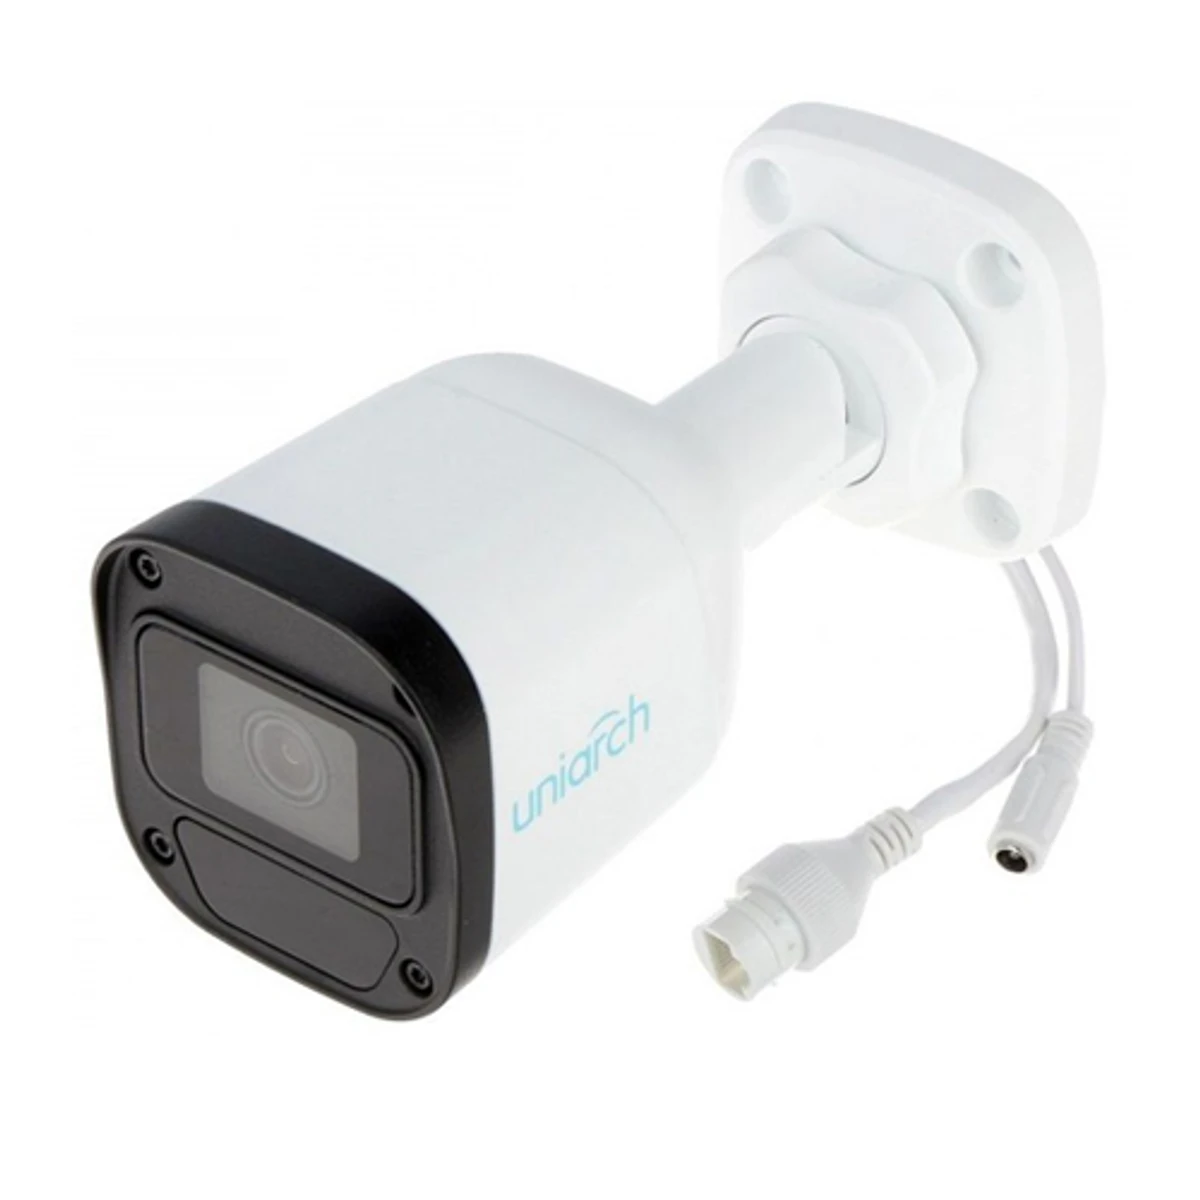 Uniarch IPC-B113-PF40 Outdoor IP Security Camera 4 MP